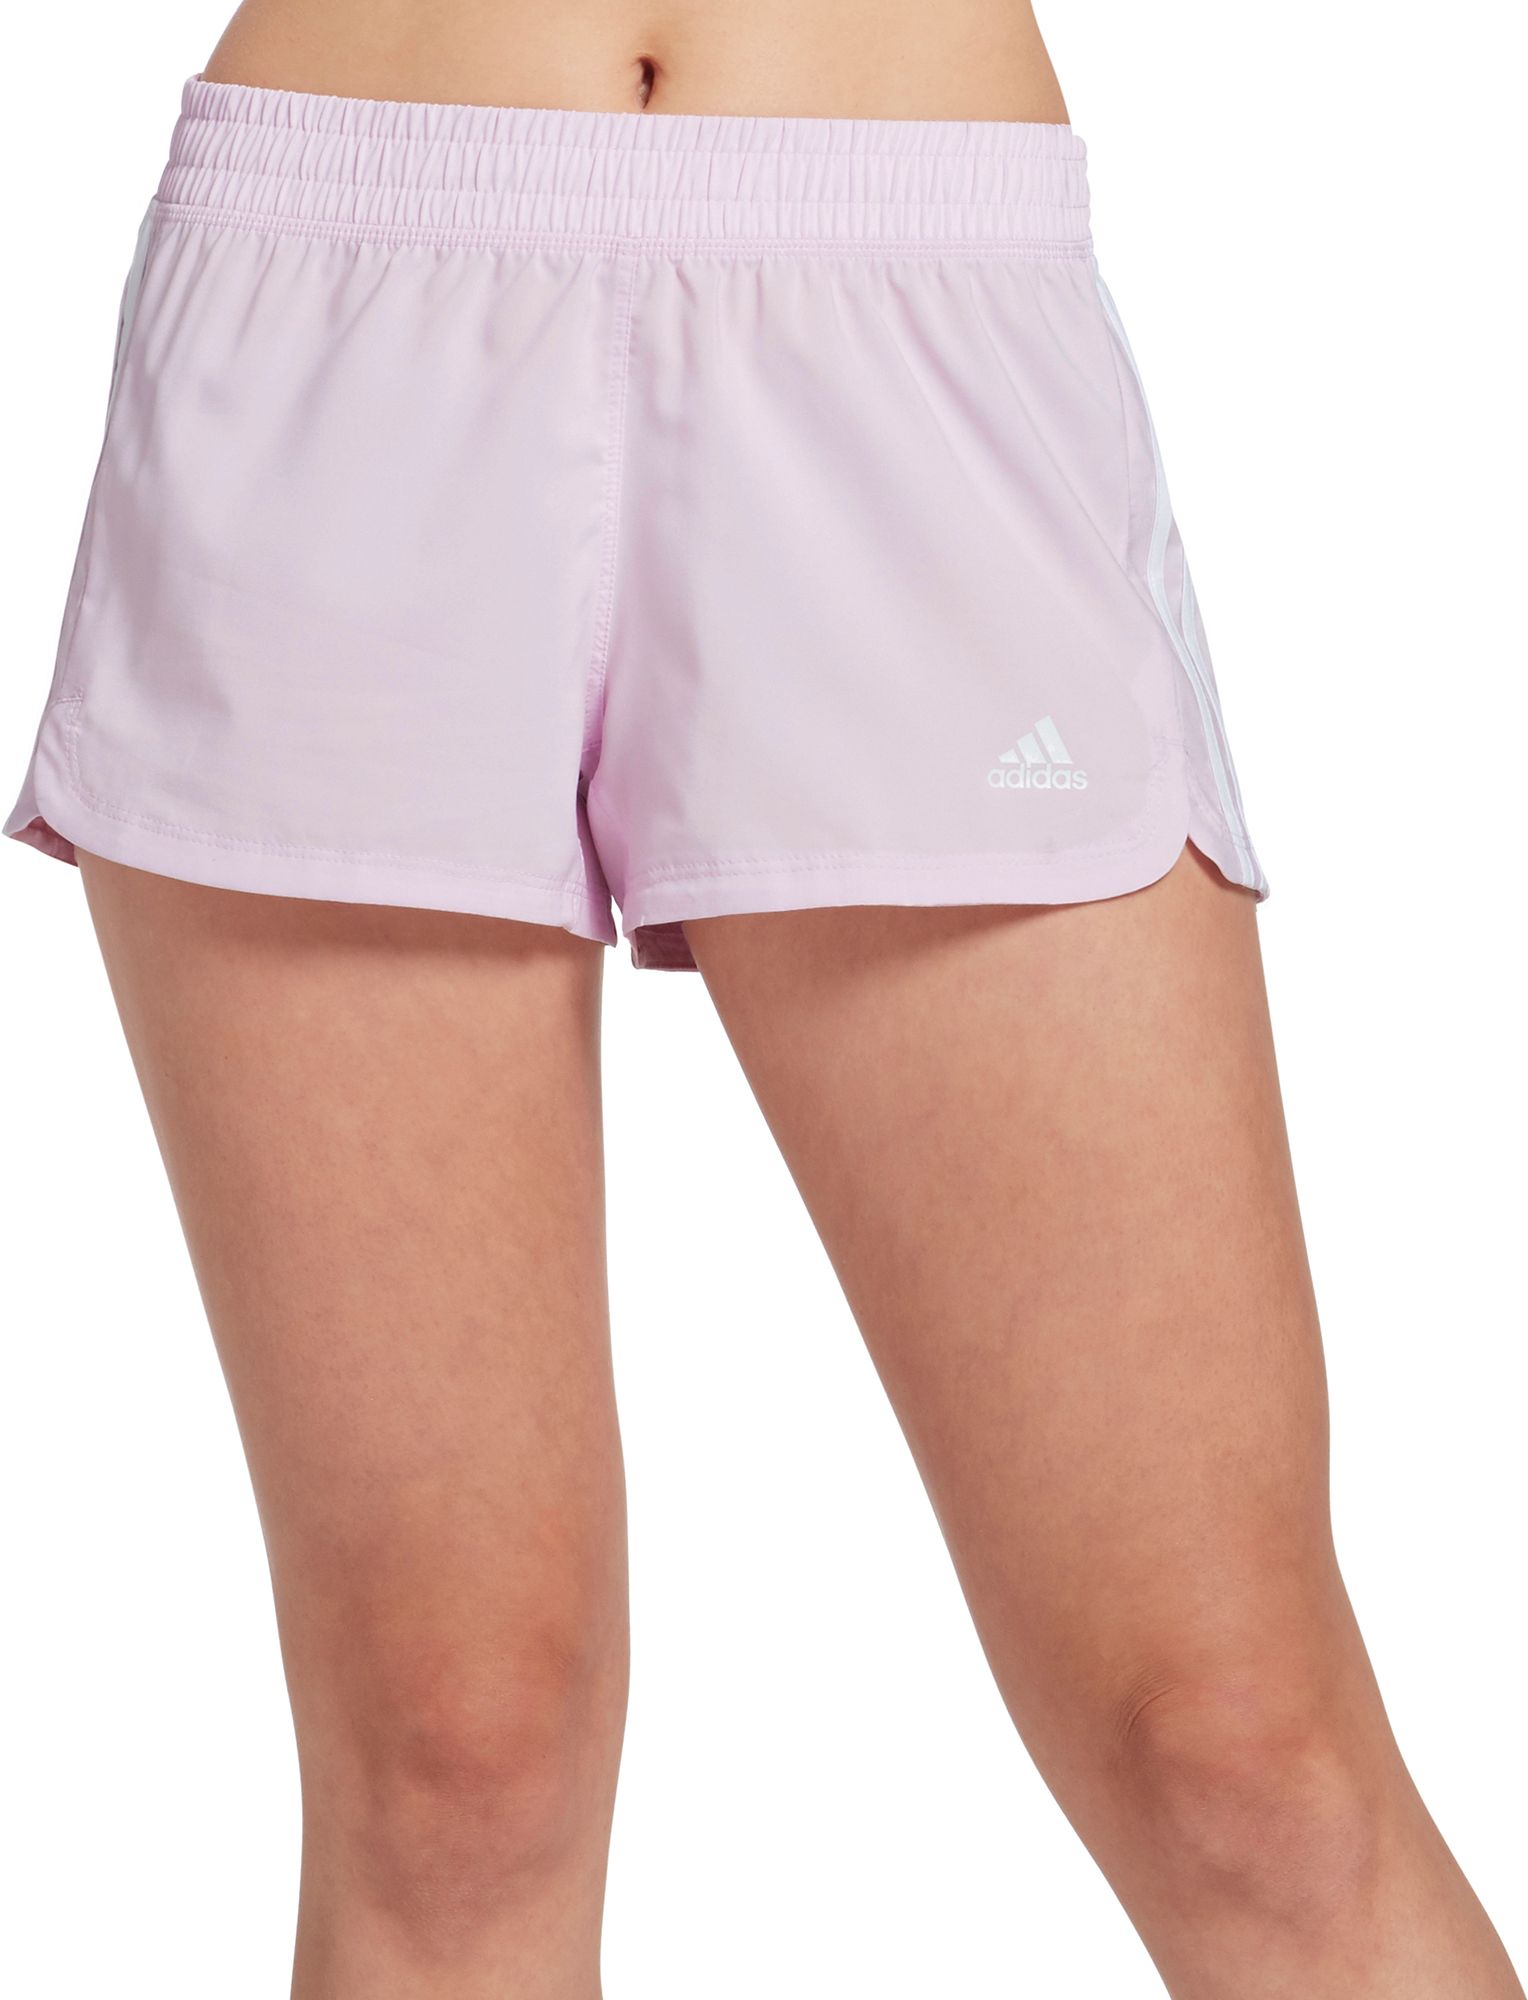 womens cotton adidas shorts